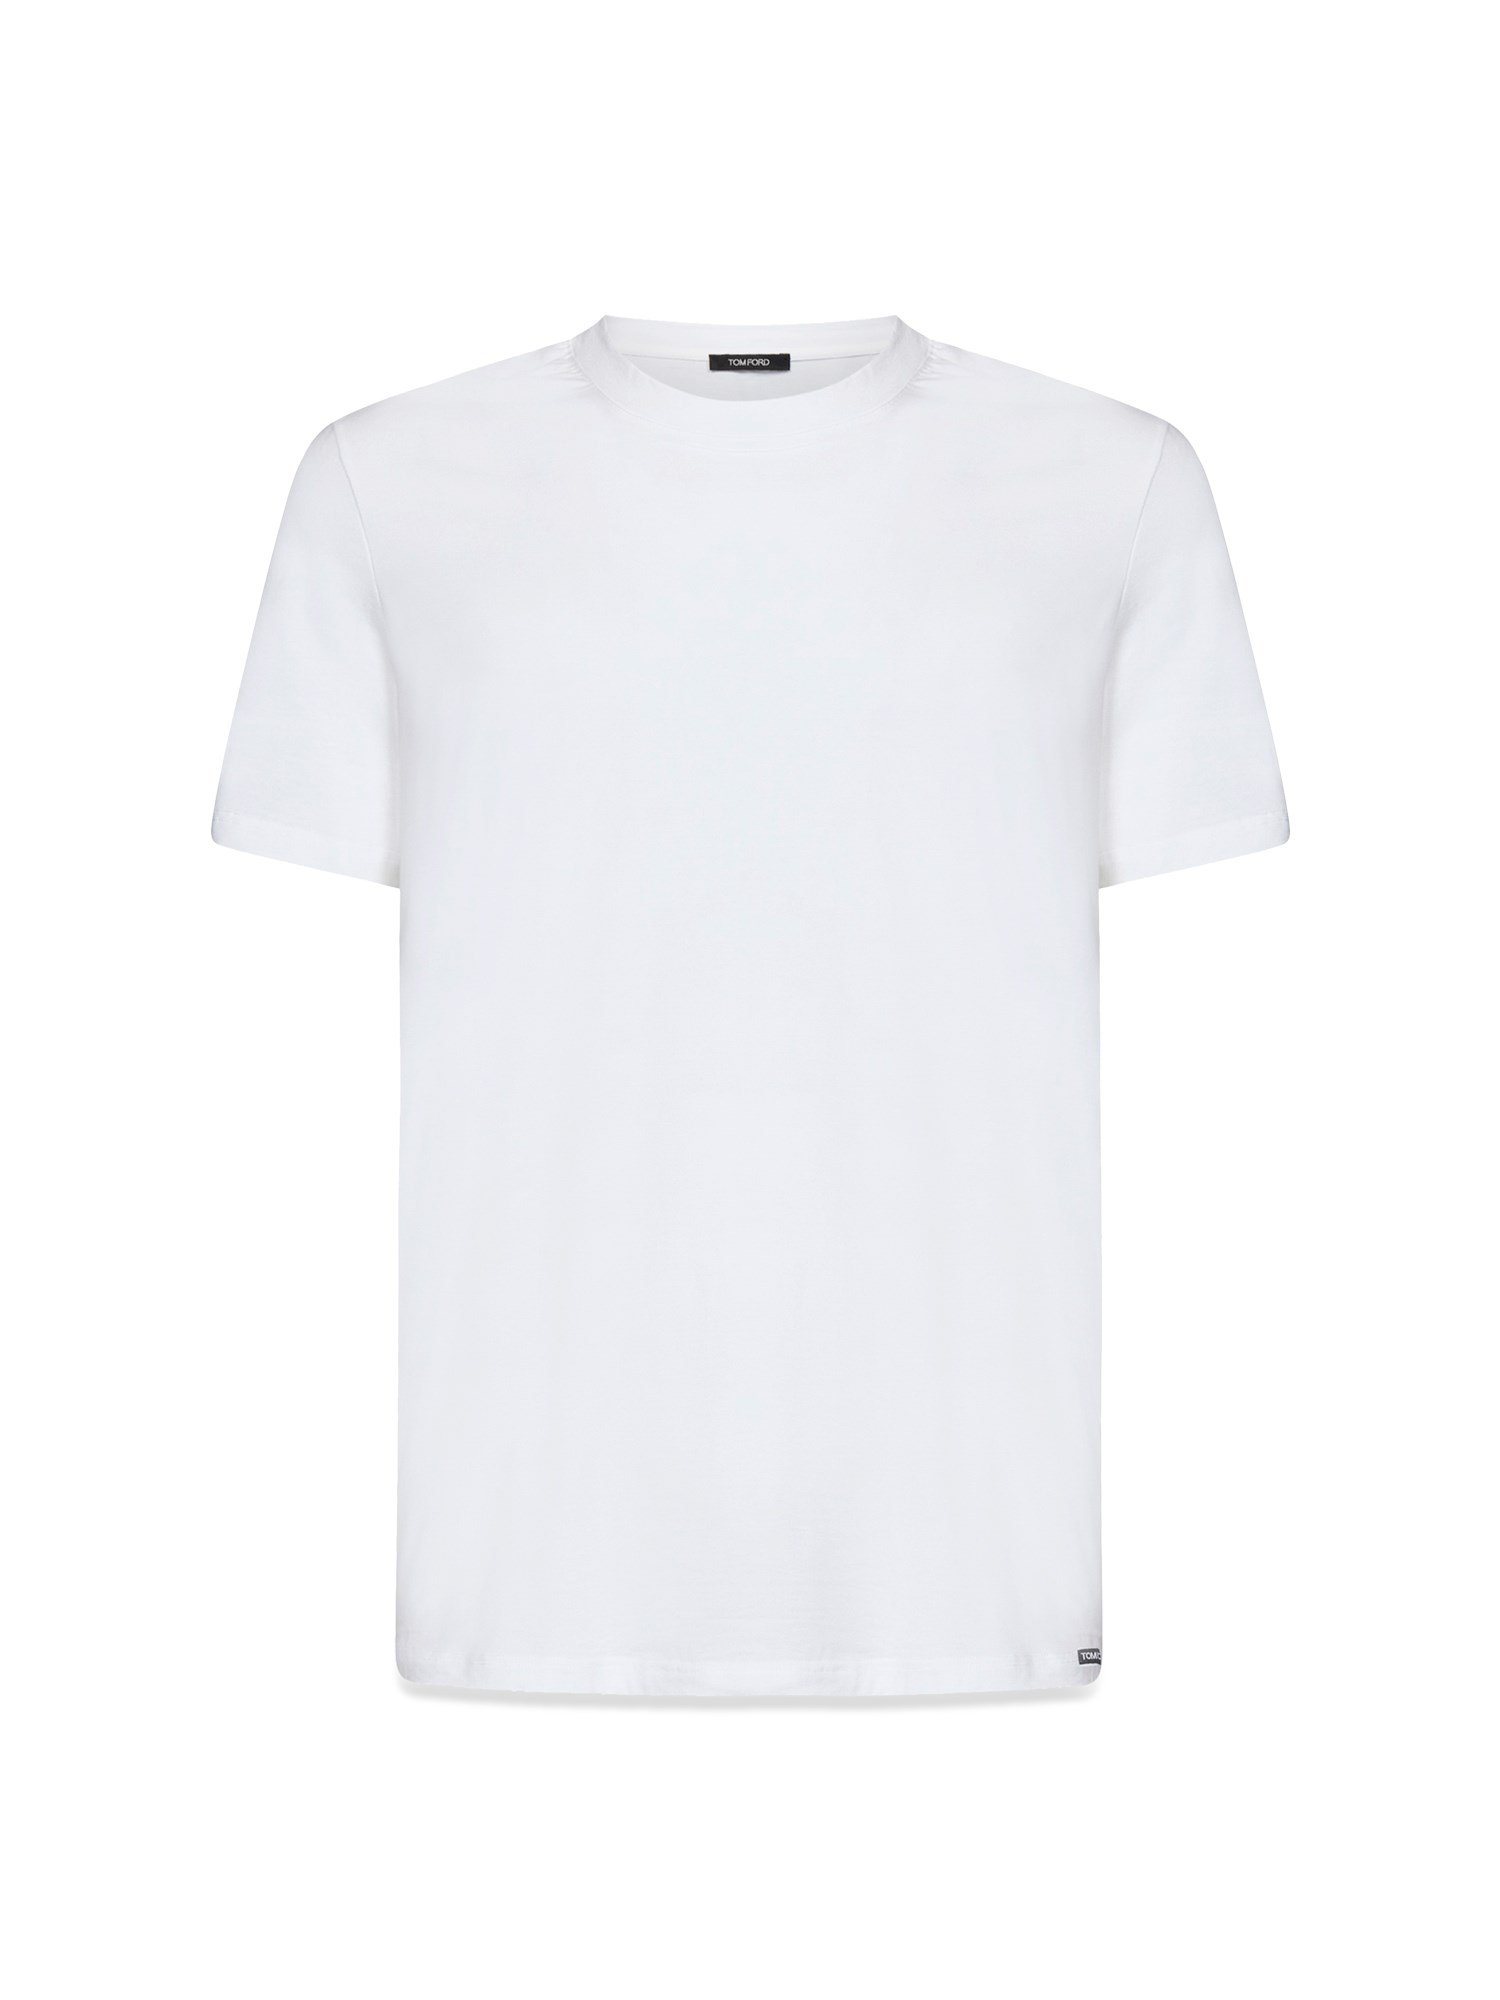 tom ford regular fit t-shirt